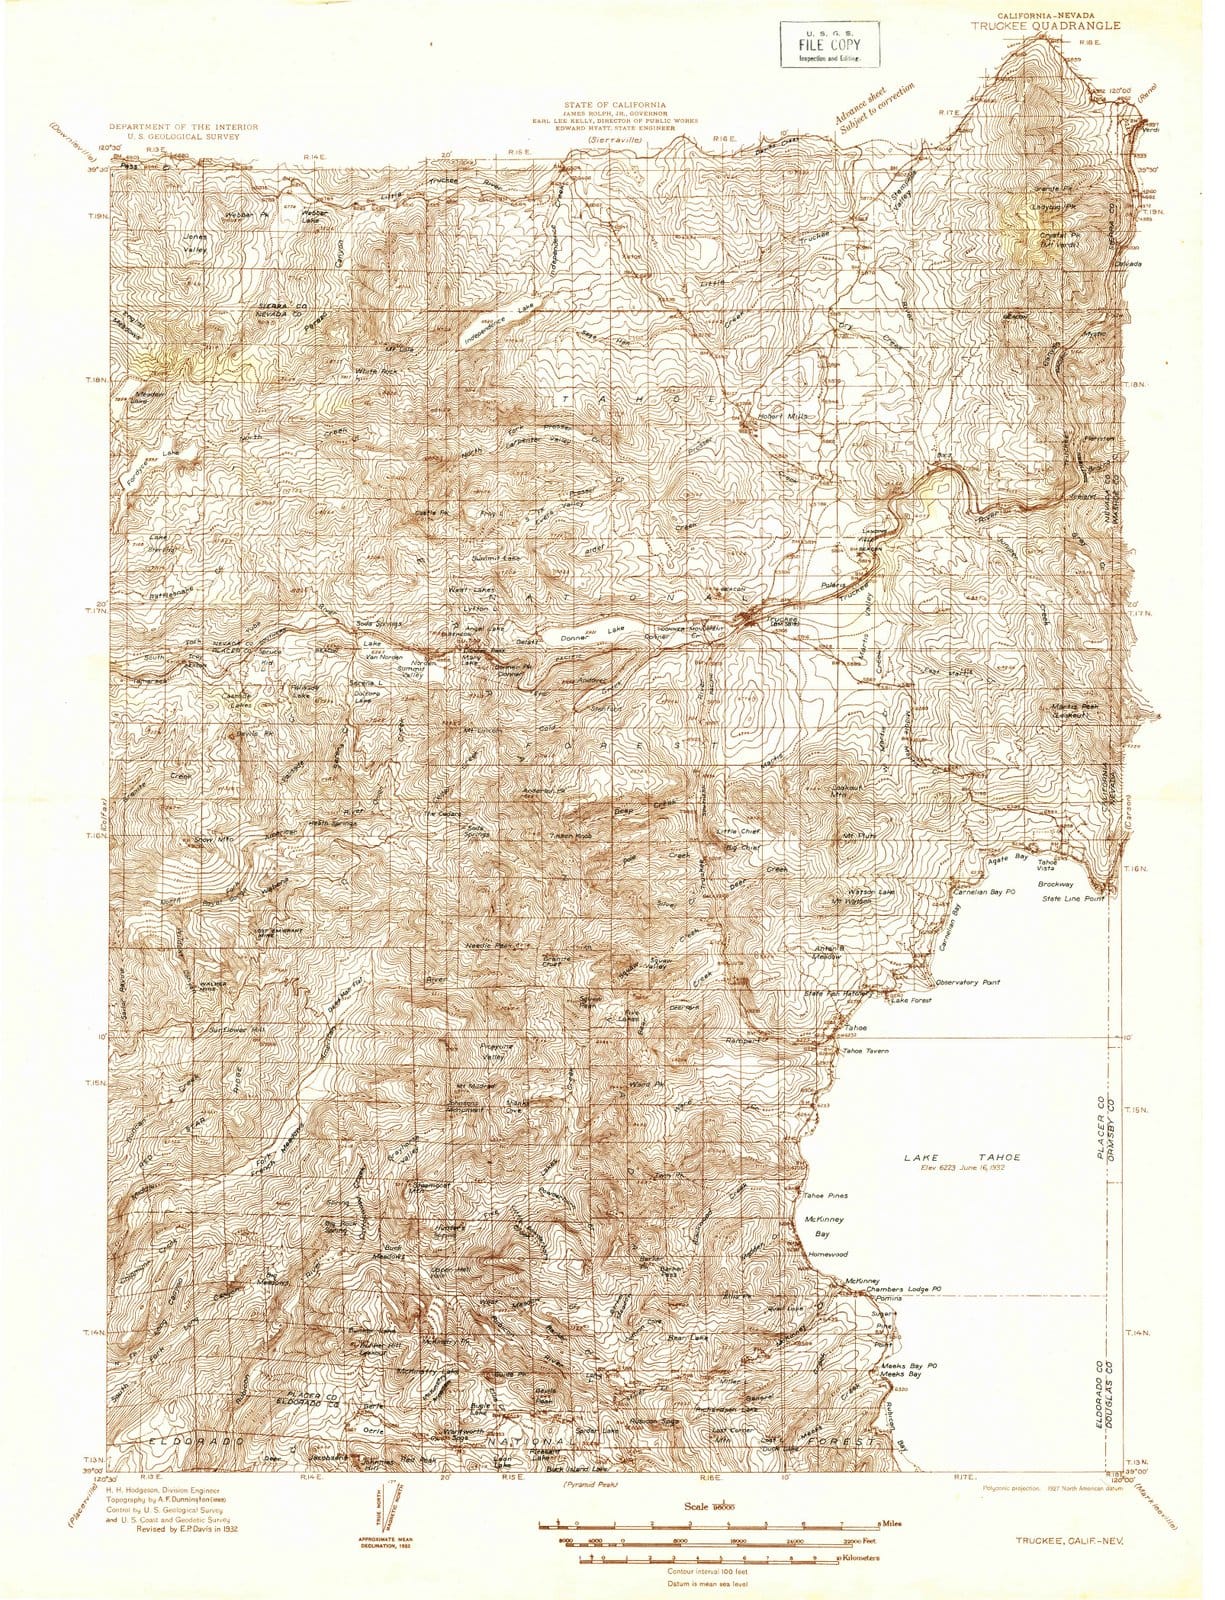 1932 Truckee, CA - California - USGS Topographic Map